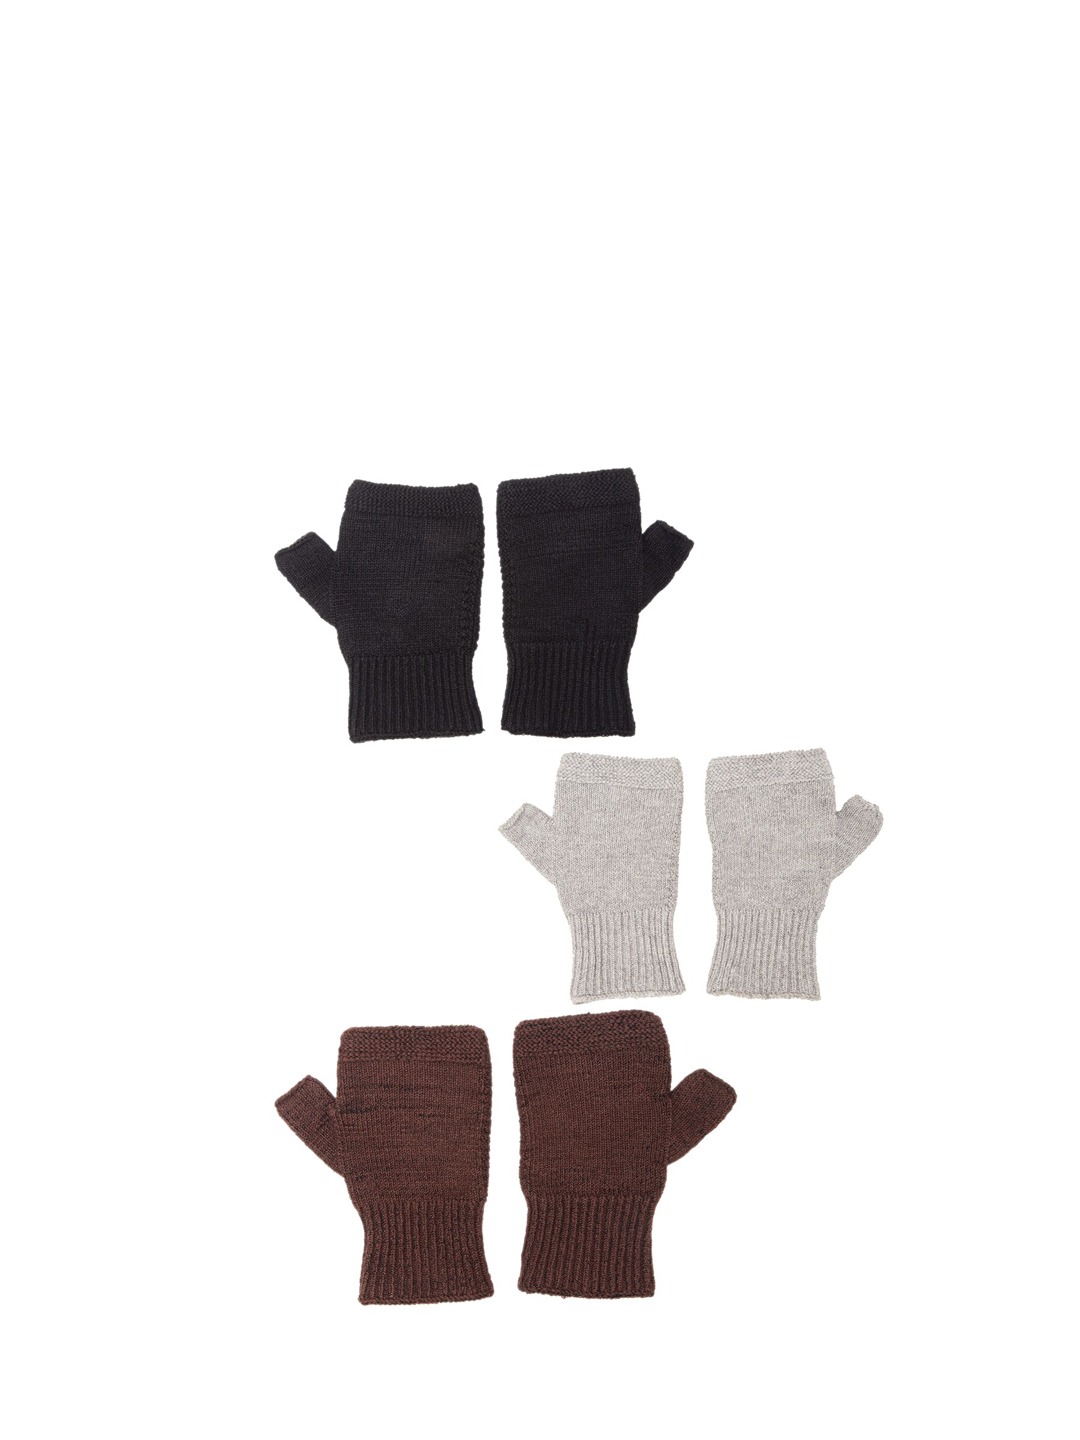 Accessories Gloves | Bharatasya Unisex Set of 3 Grey & Black Solid Knitted Cotton Gloves - US50436